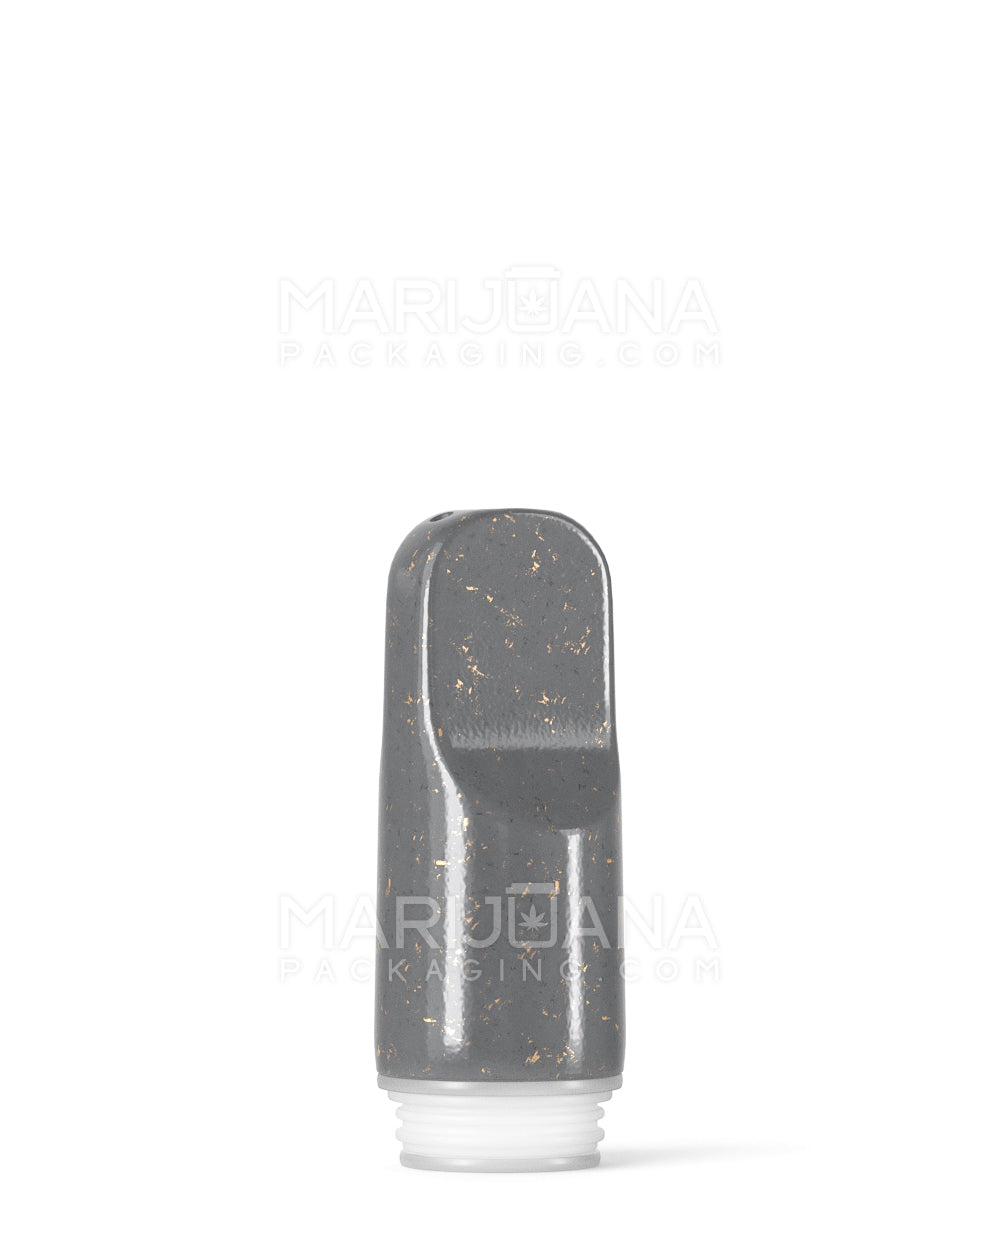 AVD | Flat Vape Mouthpiece for Glass Cartridges | Charcoal Hemp - Eazy Press - 600 Count - 2